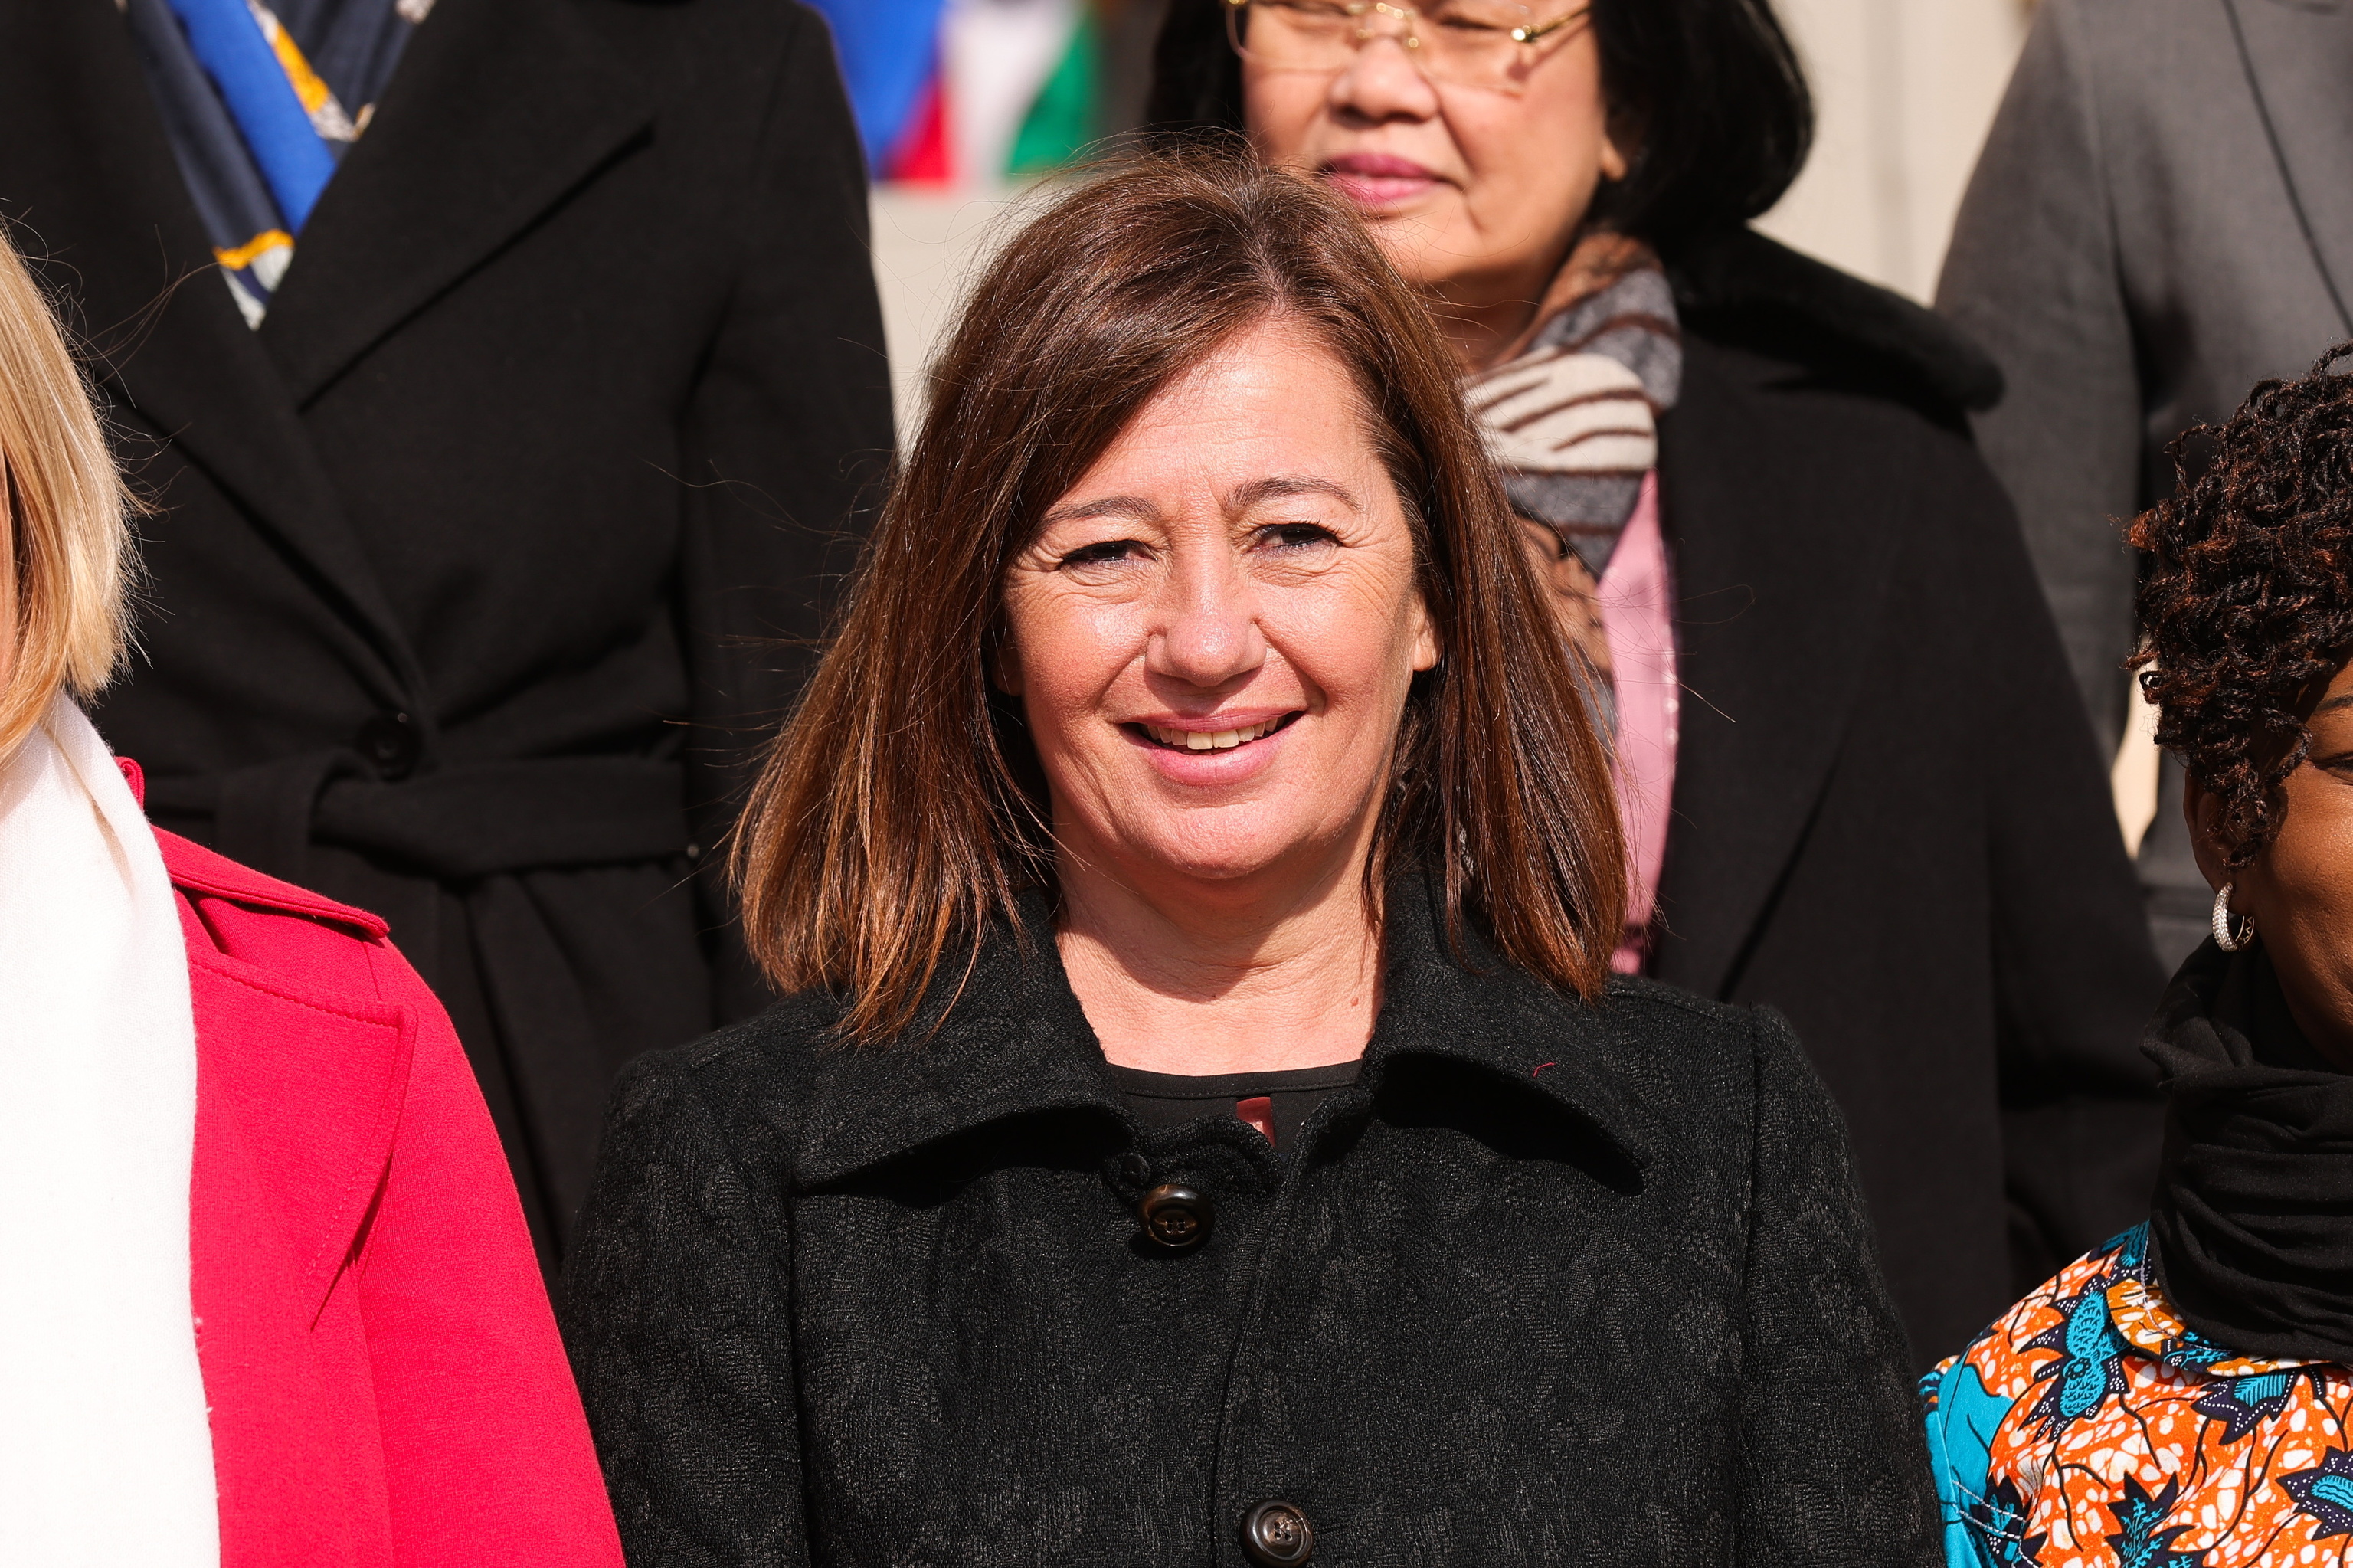 La presidenta del Congreso y ex presidenta del Govern balear, Francina Armengol.